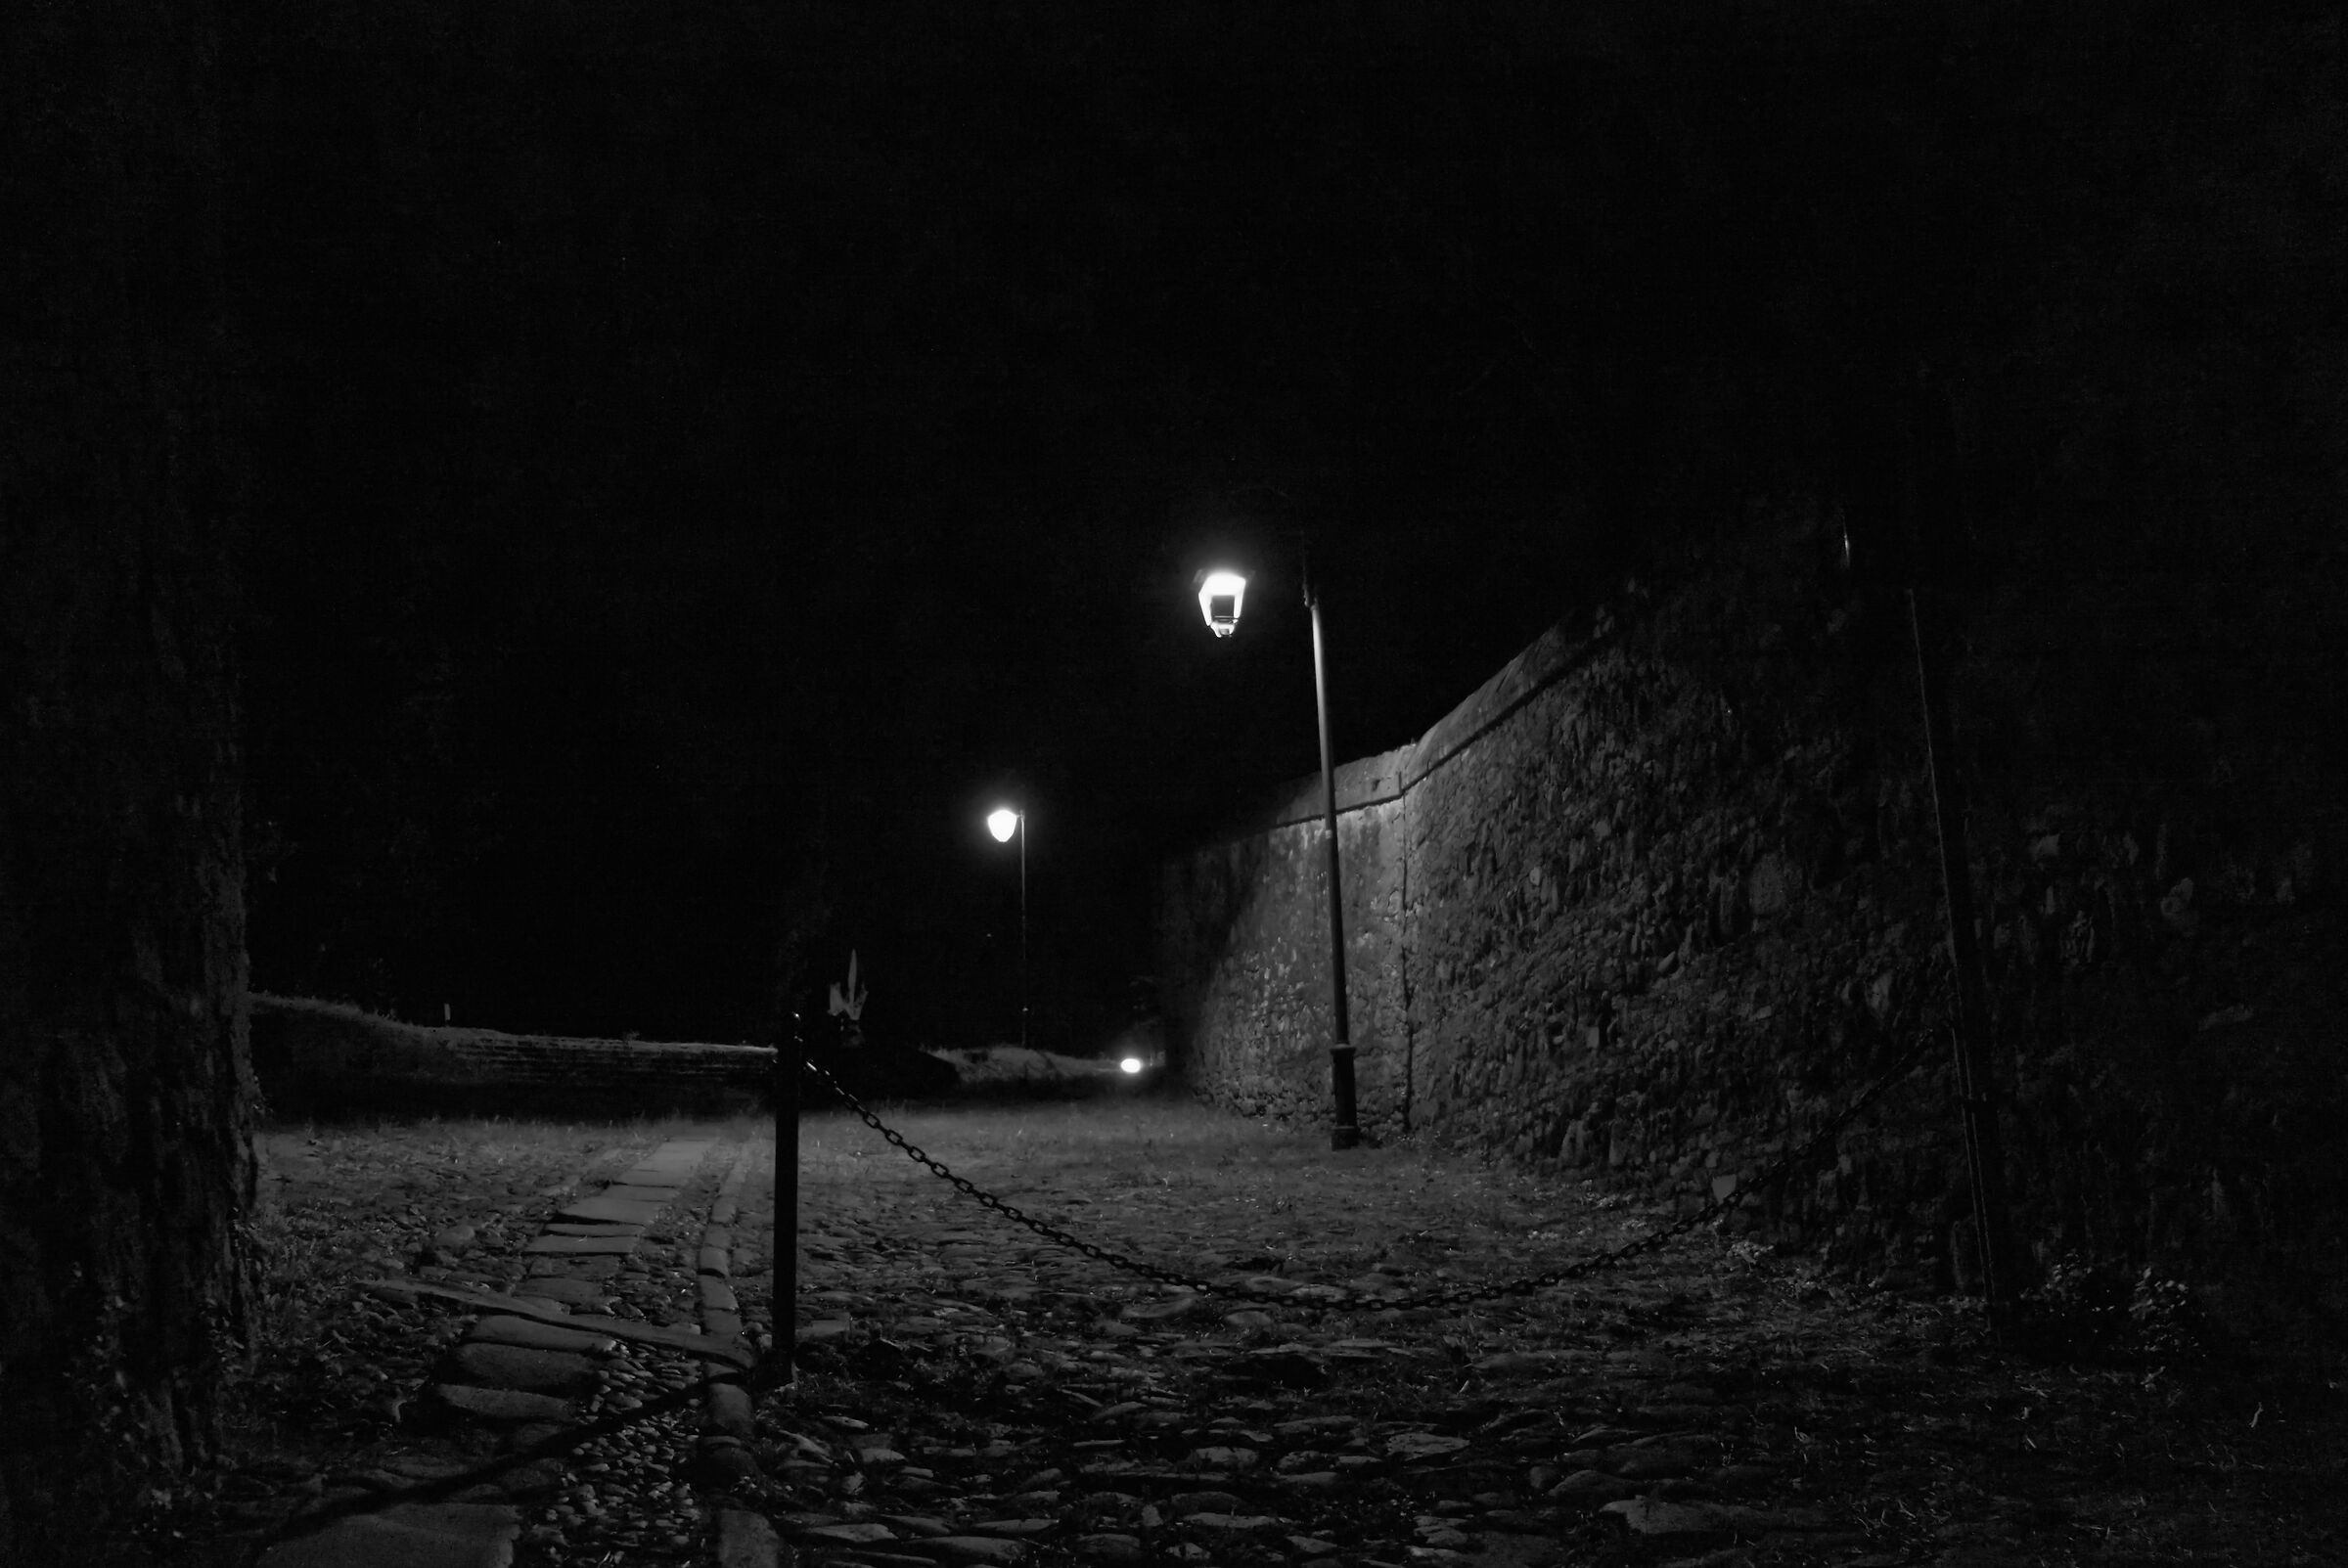 A walk in the night...